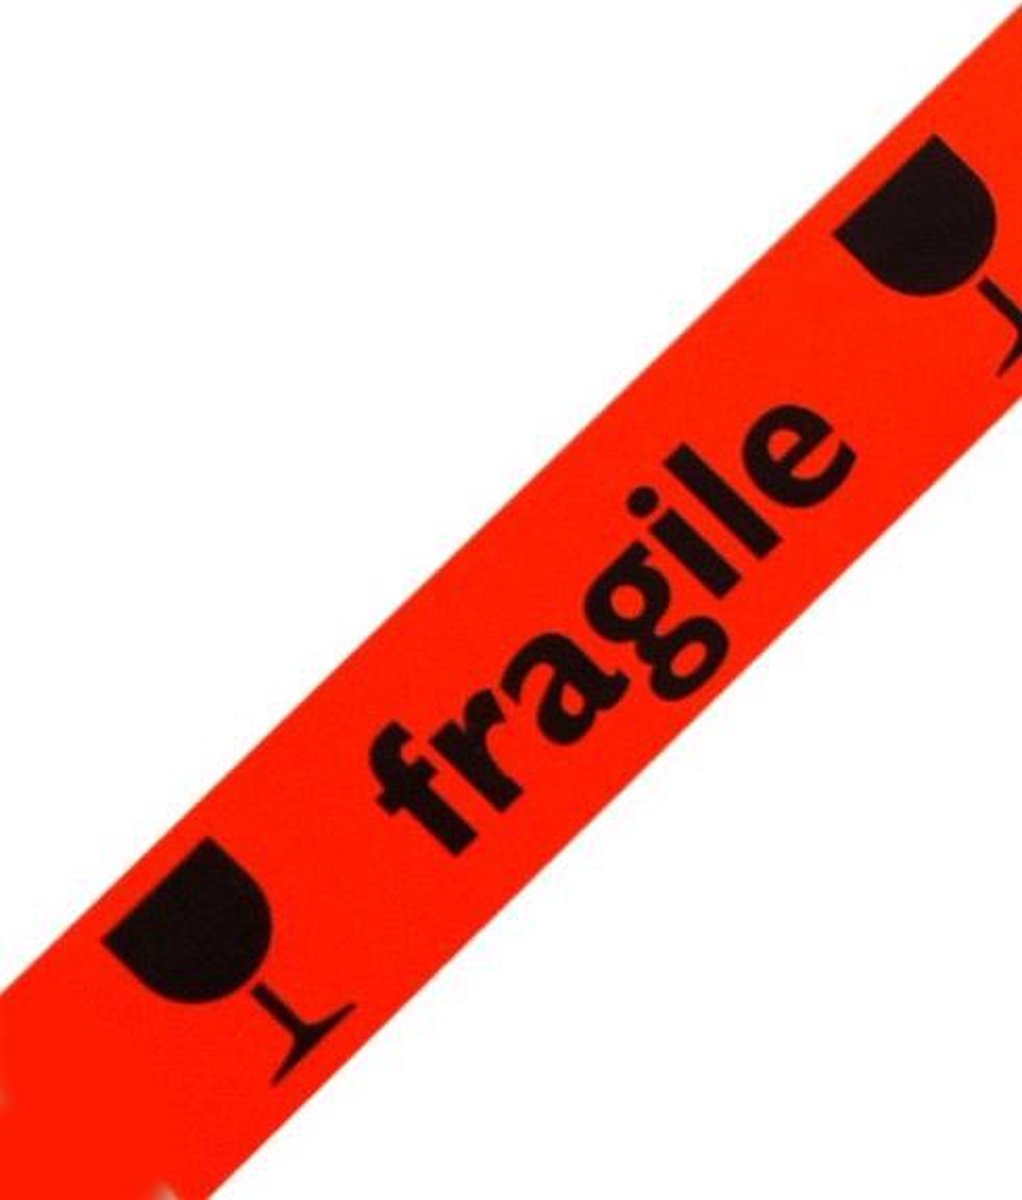 Breekbaar tape - Oranje - Fragile tape - 66 meter x 5 cm - Merkloos